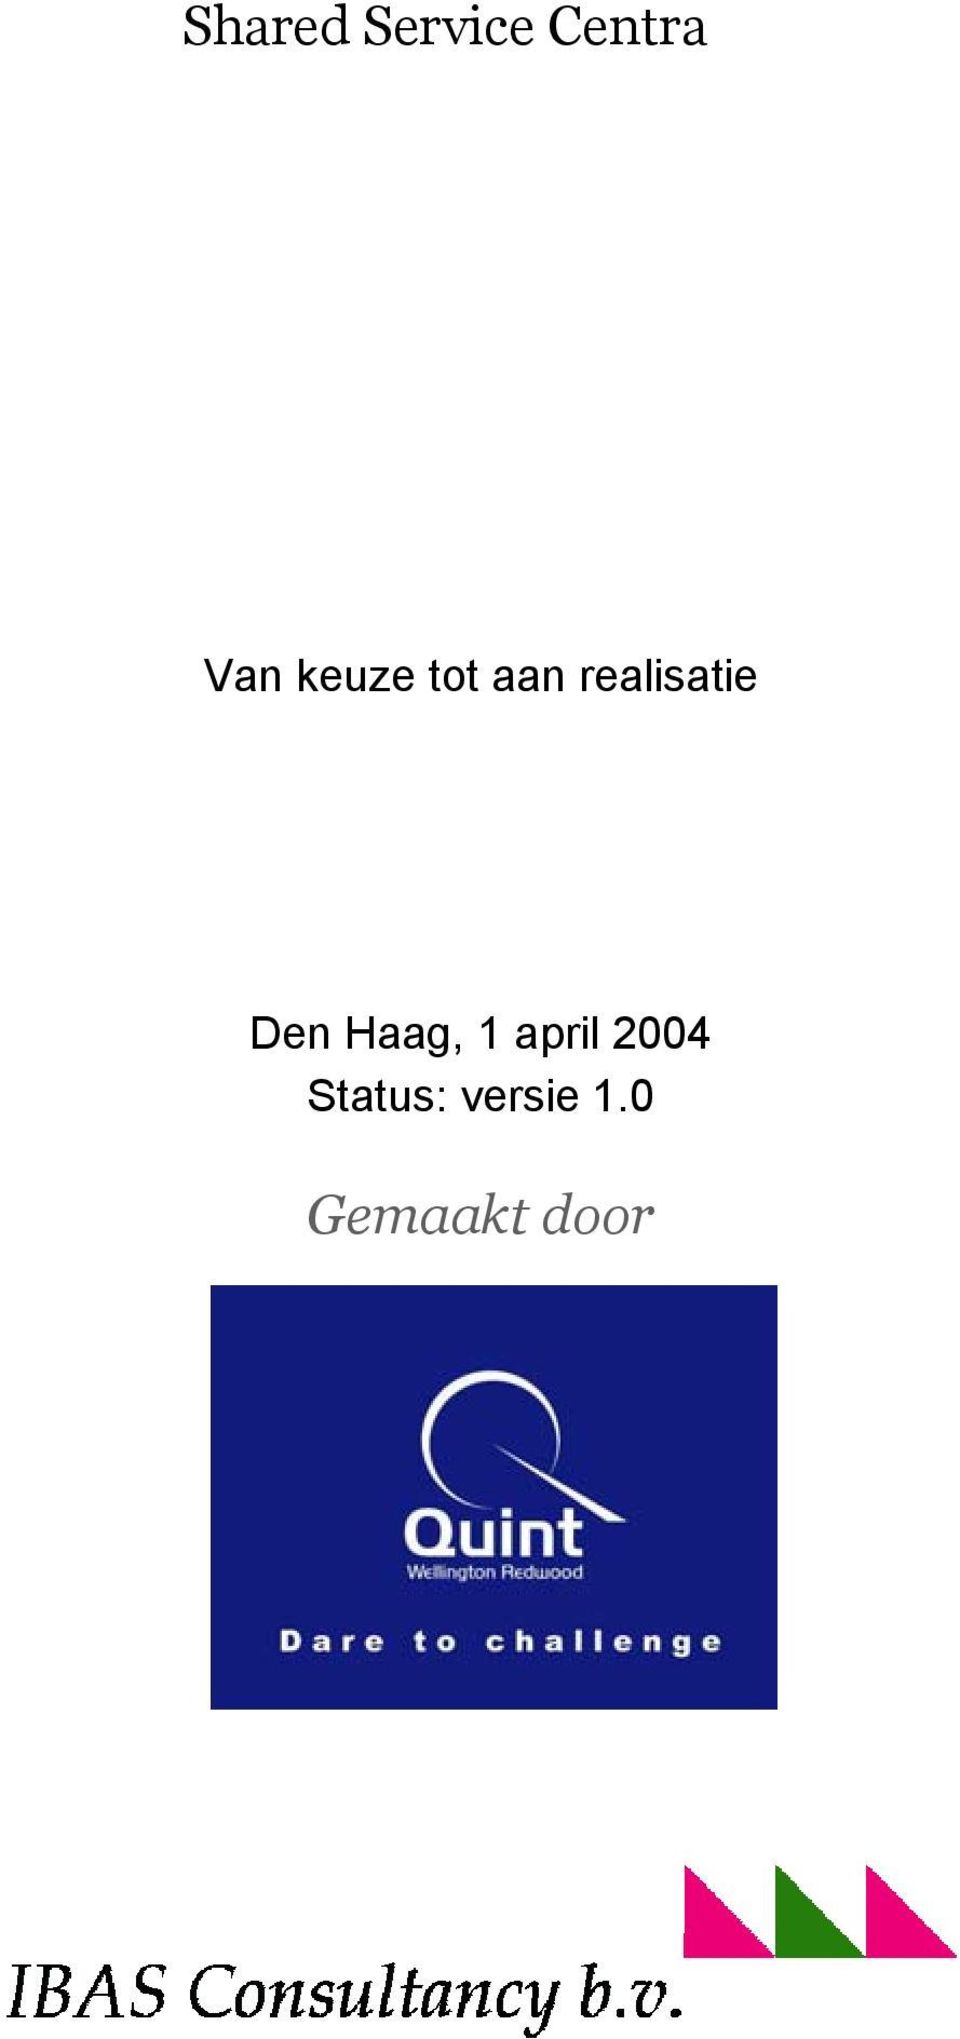 Den Haag, 1 april 2004